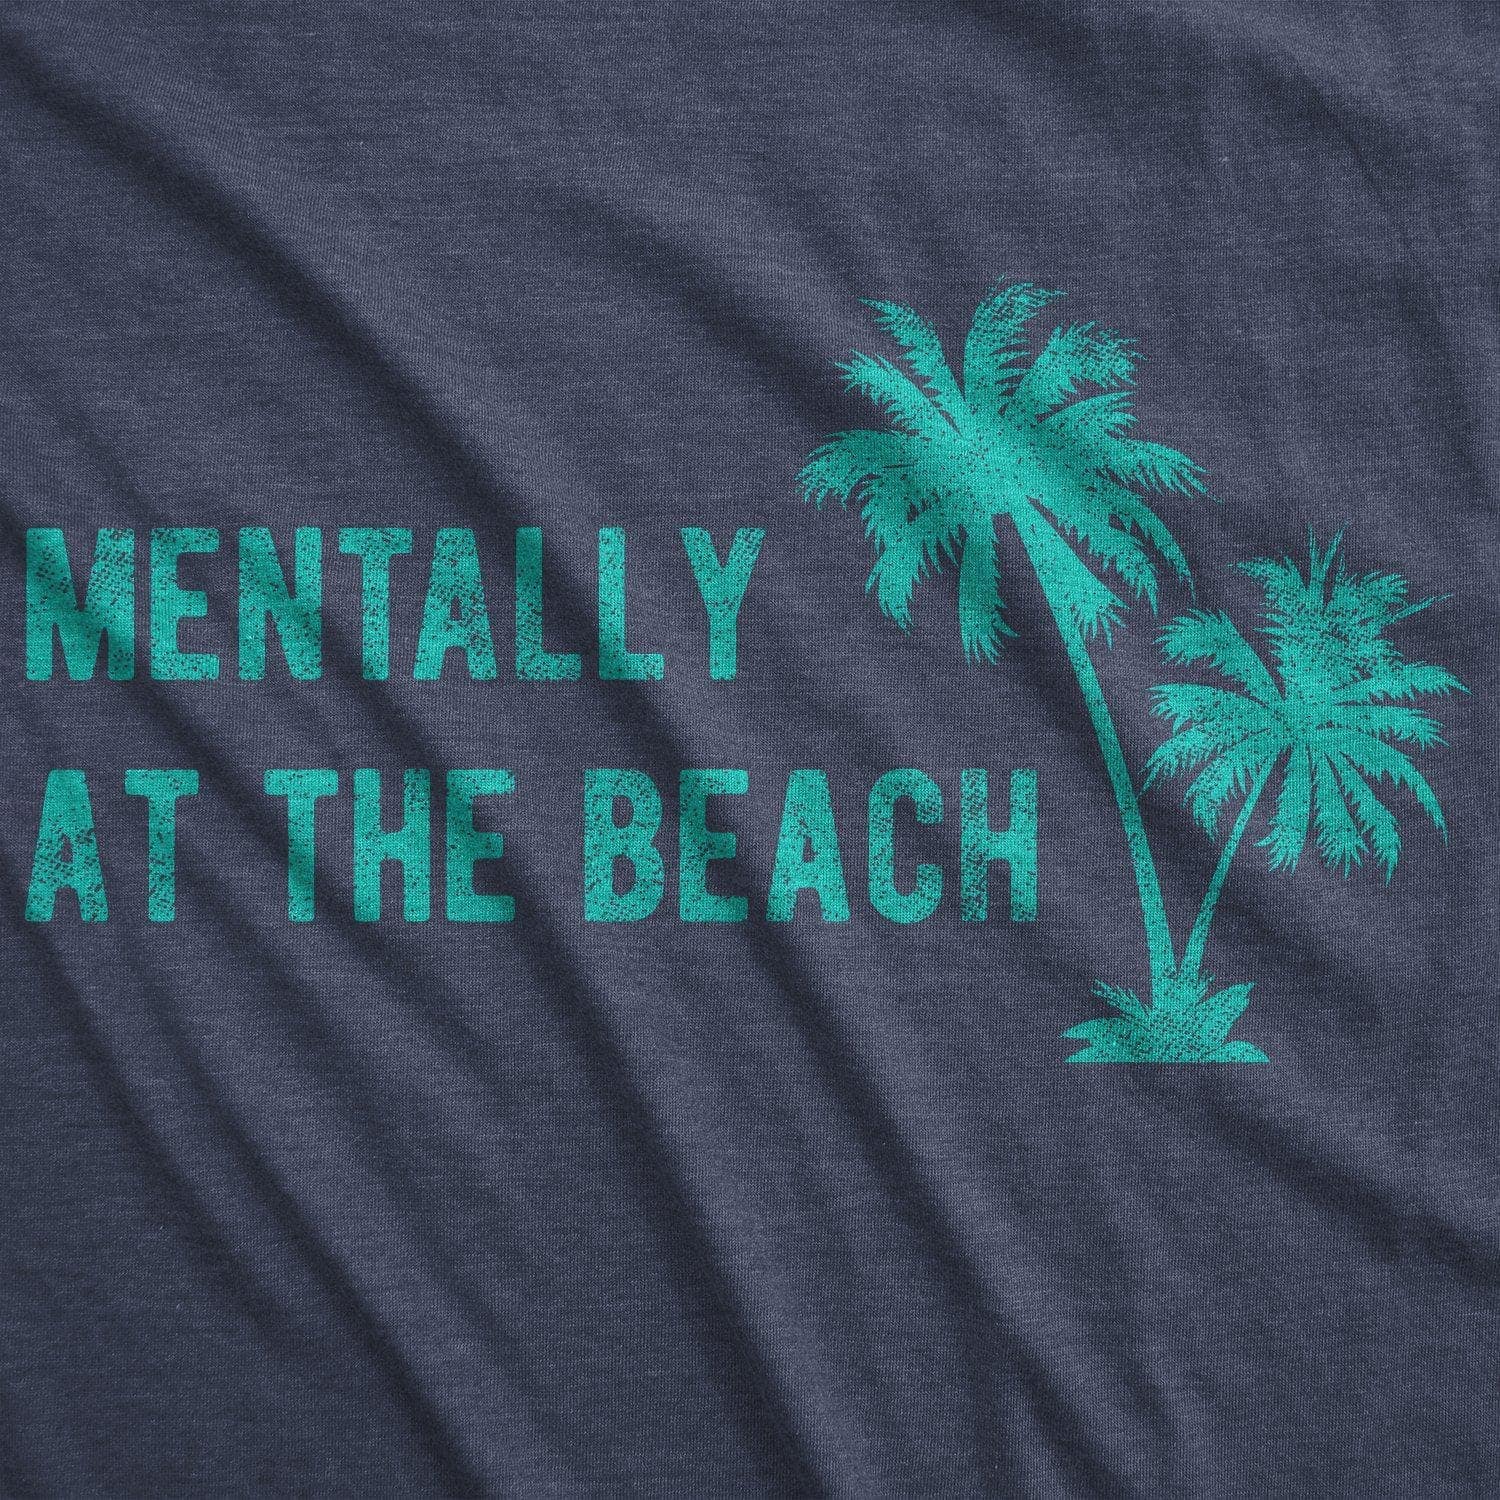 Mentally At The Beach Women's Tshirt  -  Crazy Dog T-Shirts